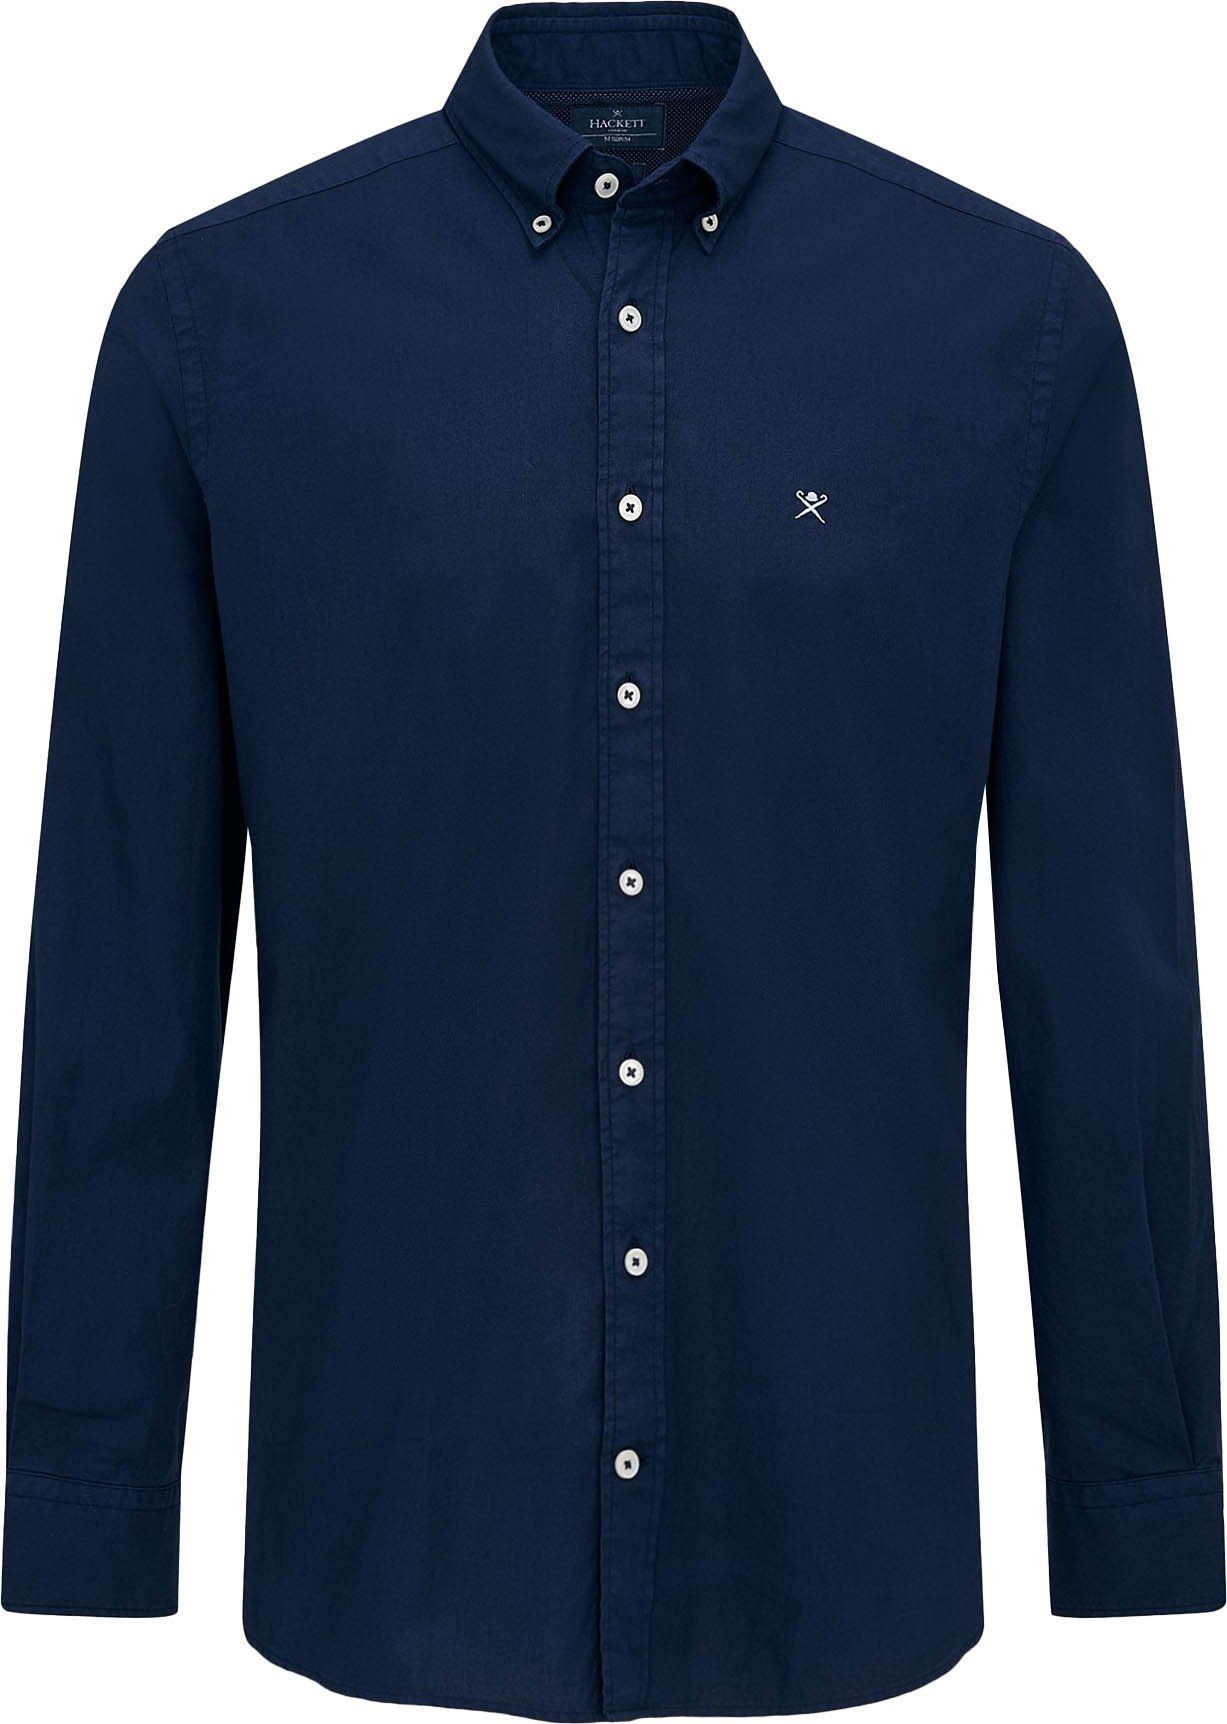 Hackett Shirt Garment Dyed Indigo Blue Dark Blue size M